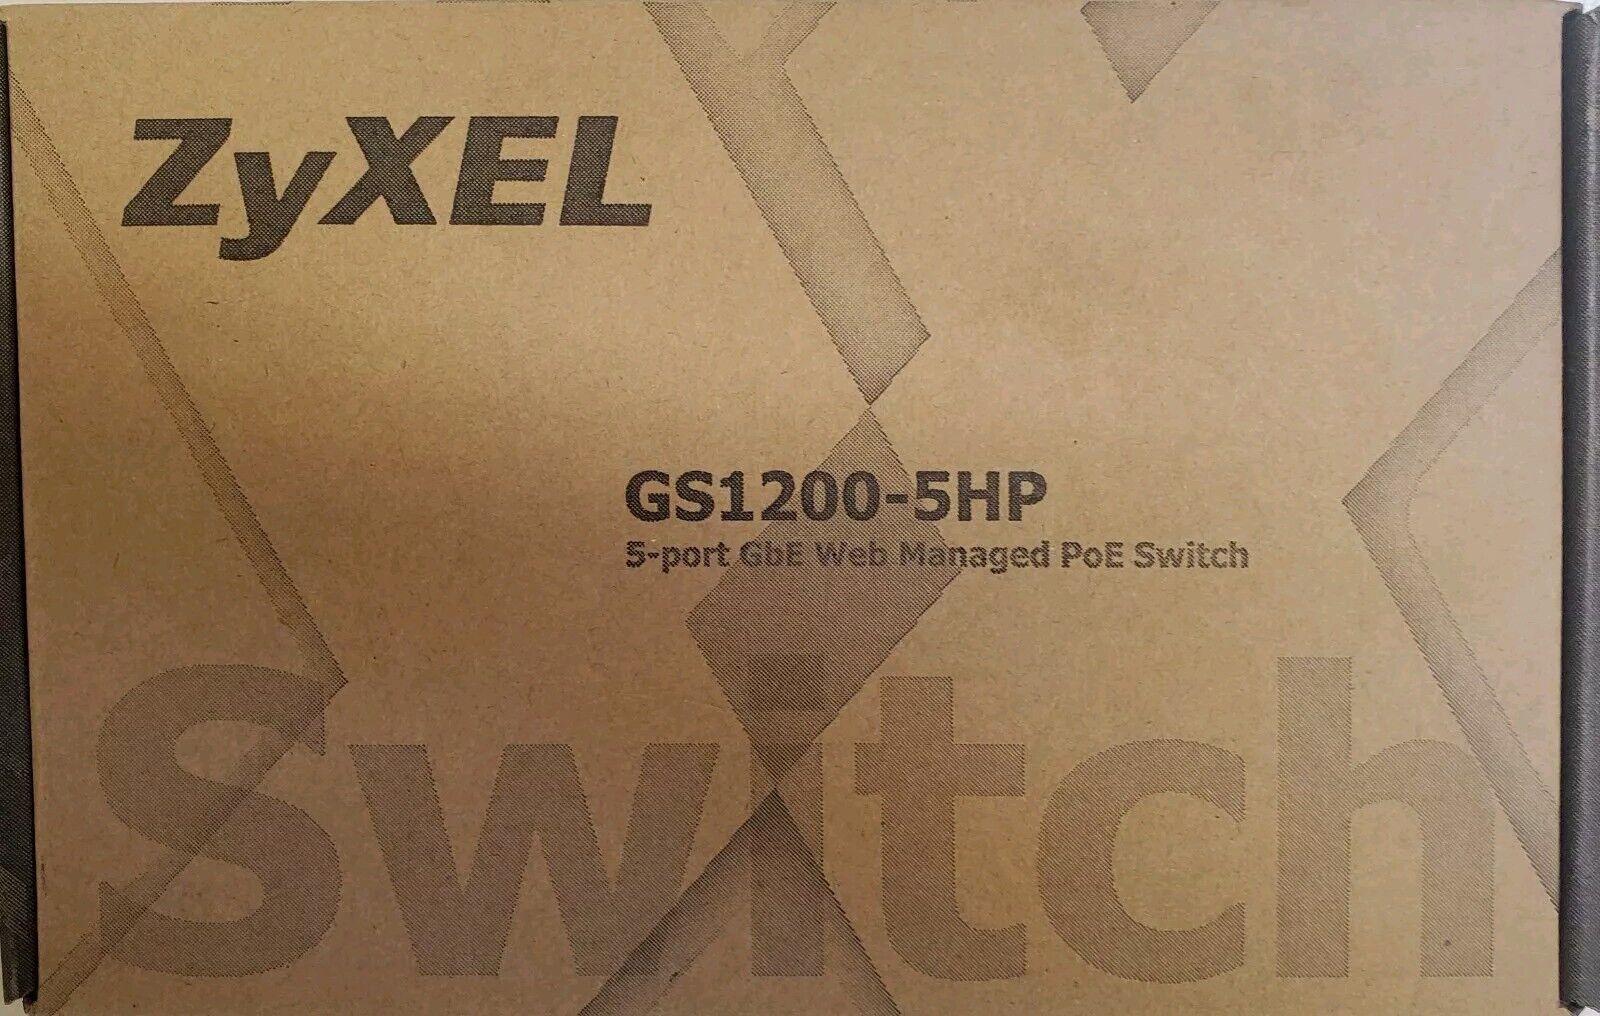 ZyXEL GS1200-5HP 5-Port Gigabit Web Managed PoE Switch BRAND NEW SEALED BOX